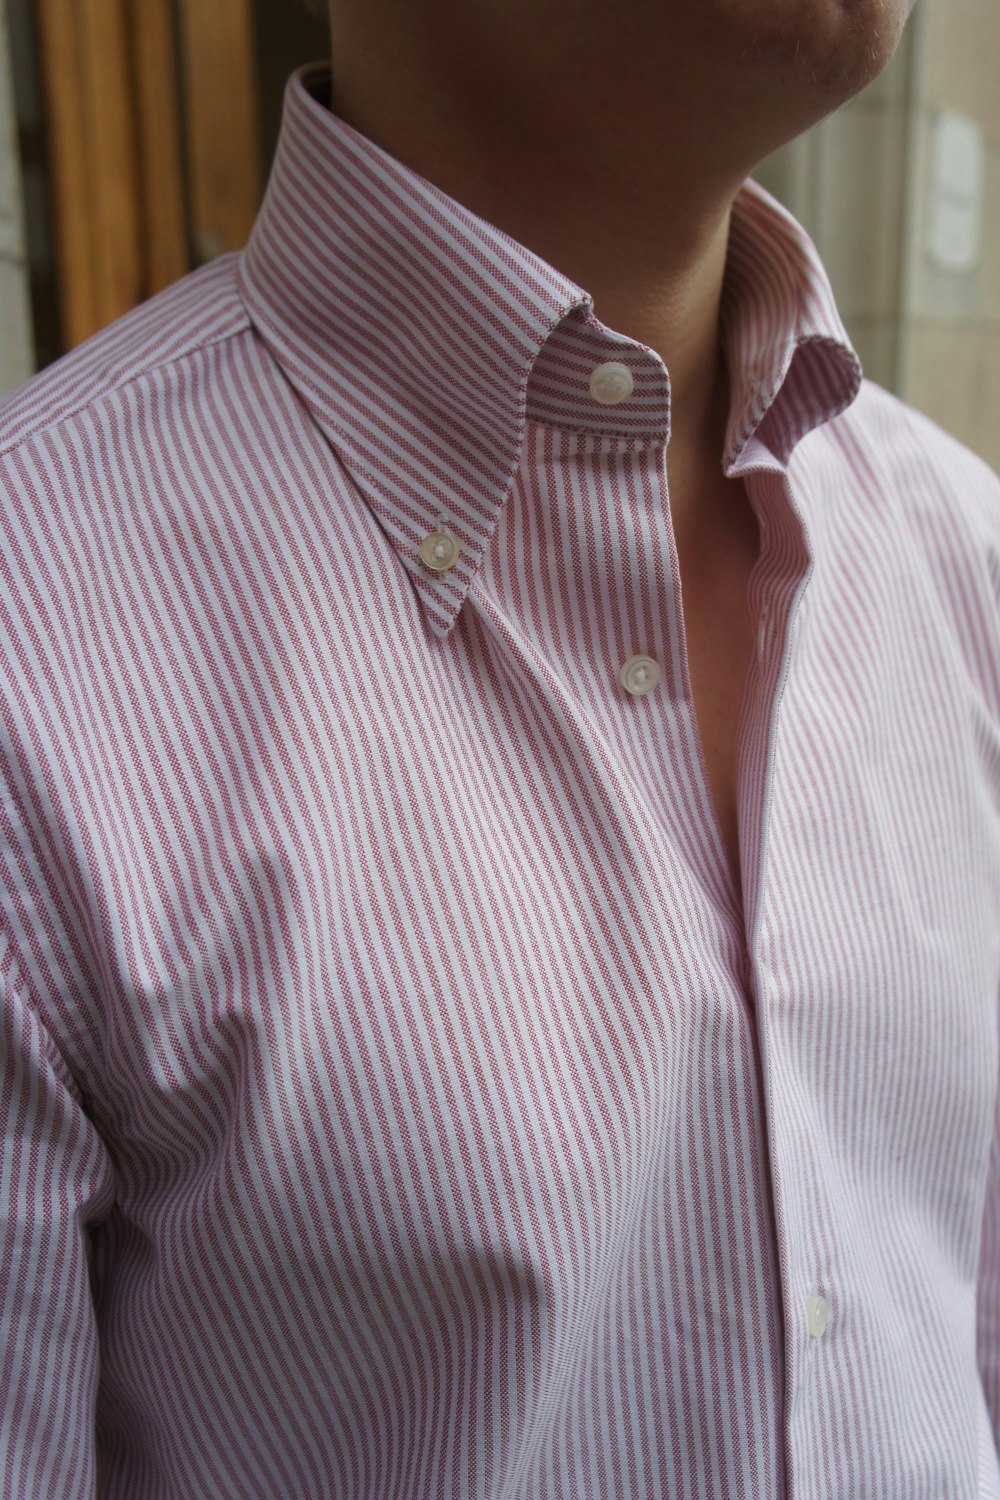 University Stripe Oxford Button Down Shirt - Burgundy/White